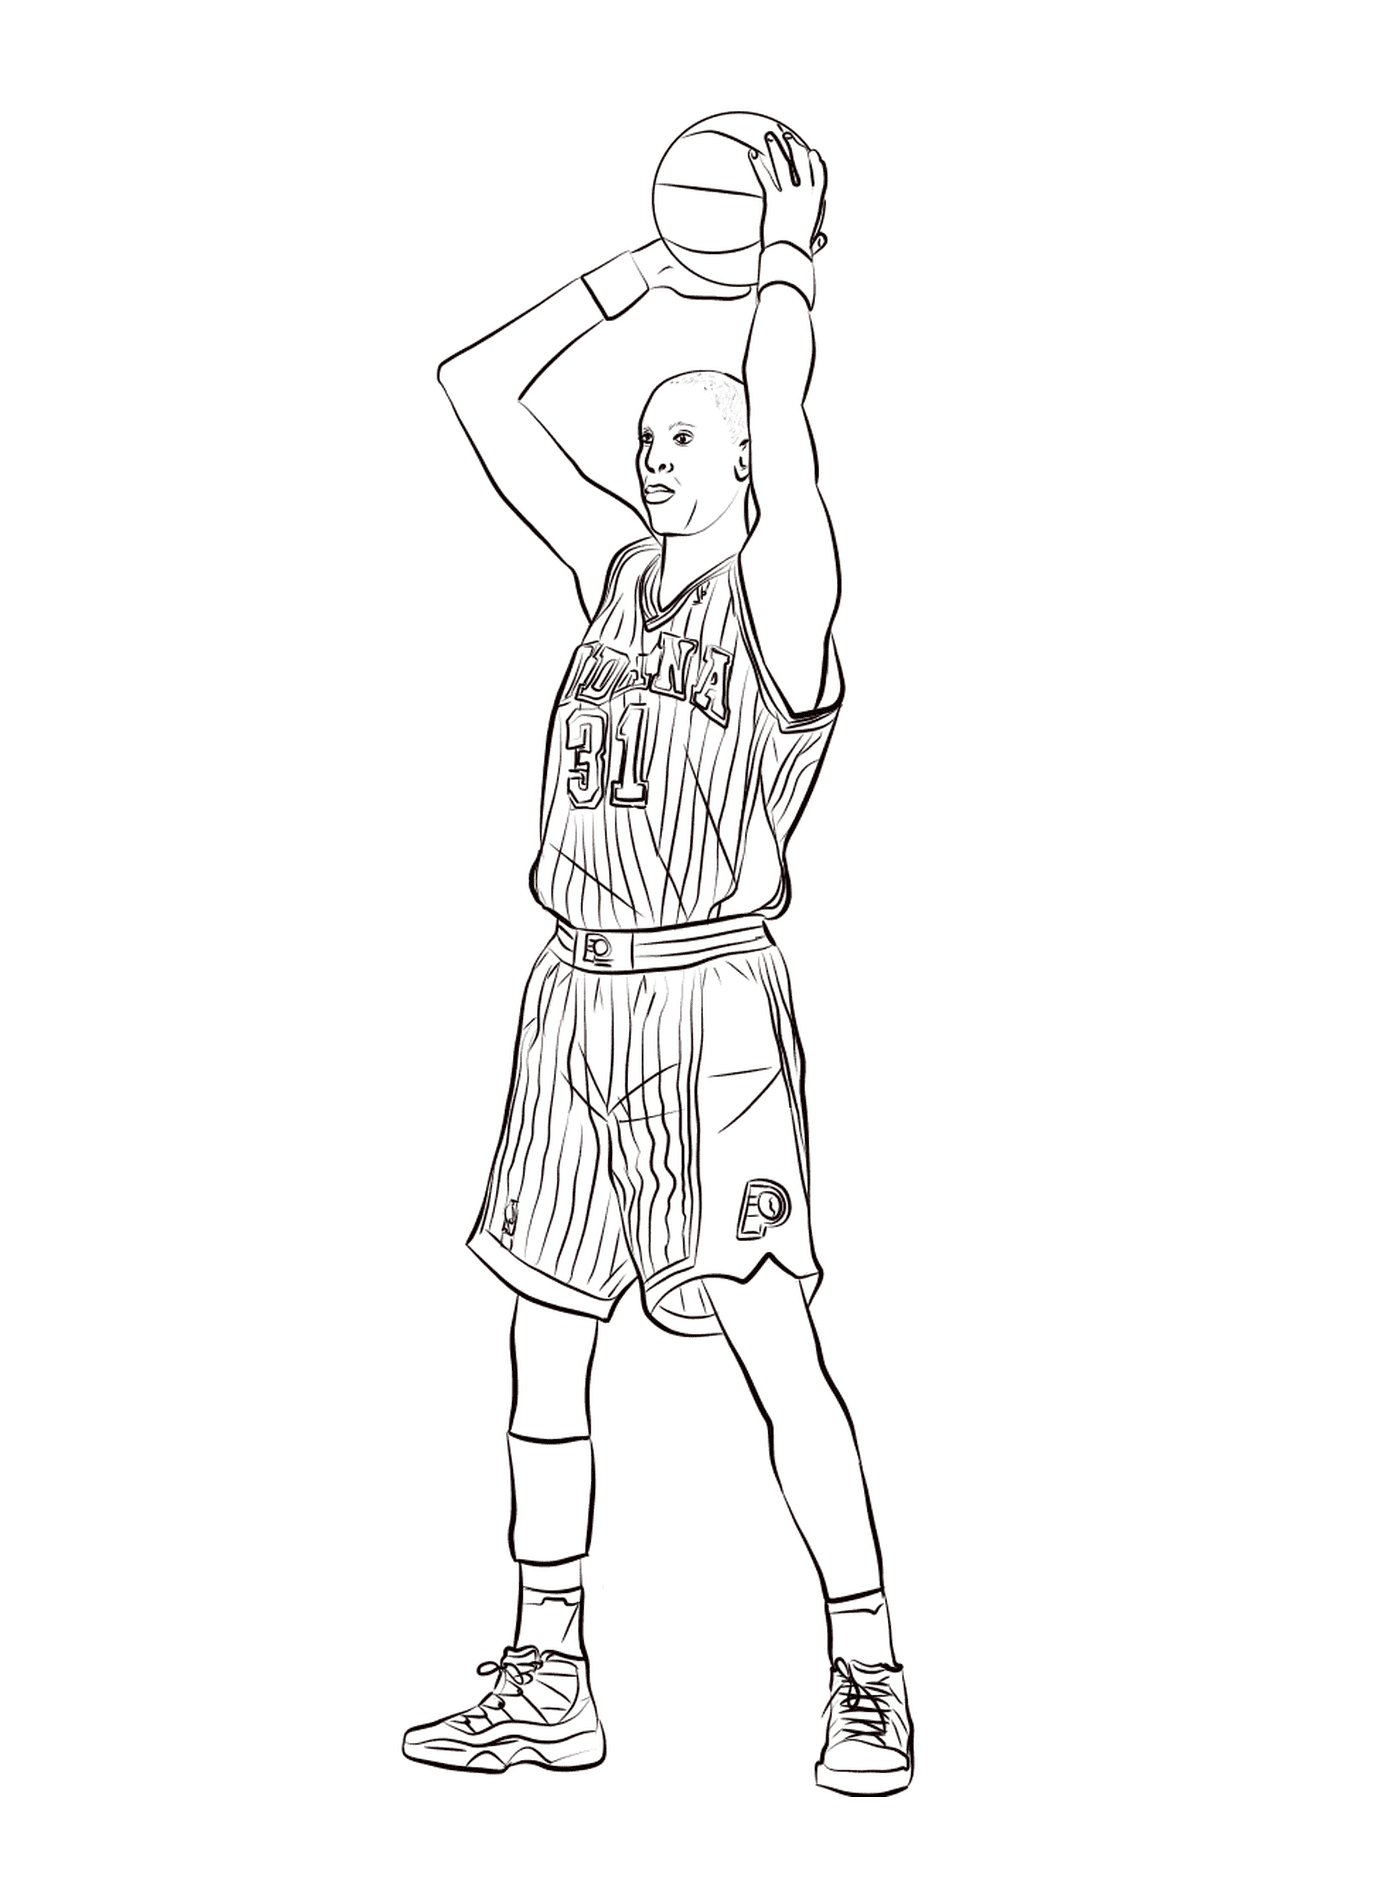  Reggie Miller holds a basketball ball 